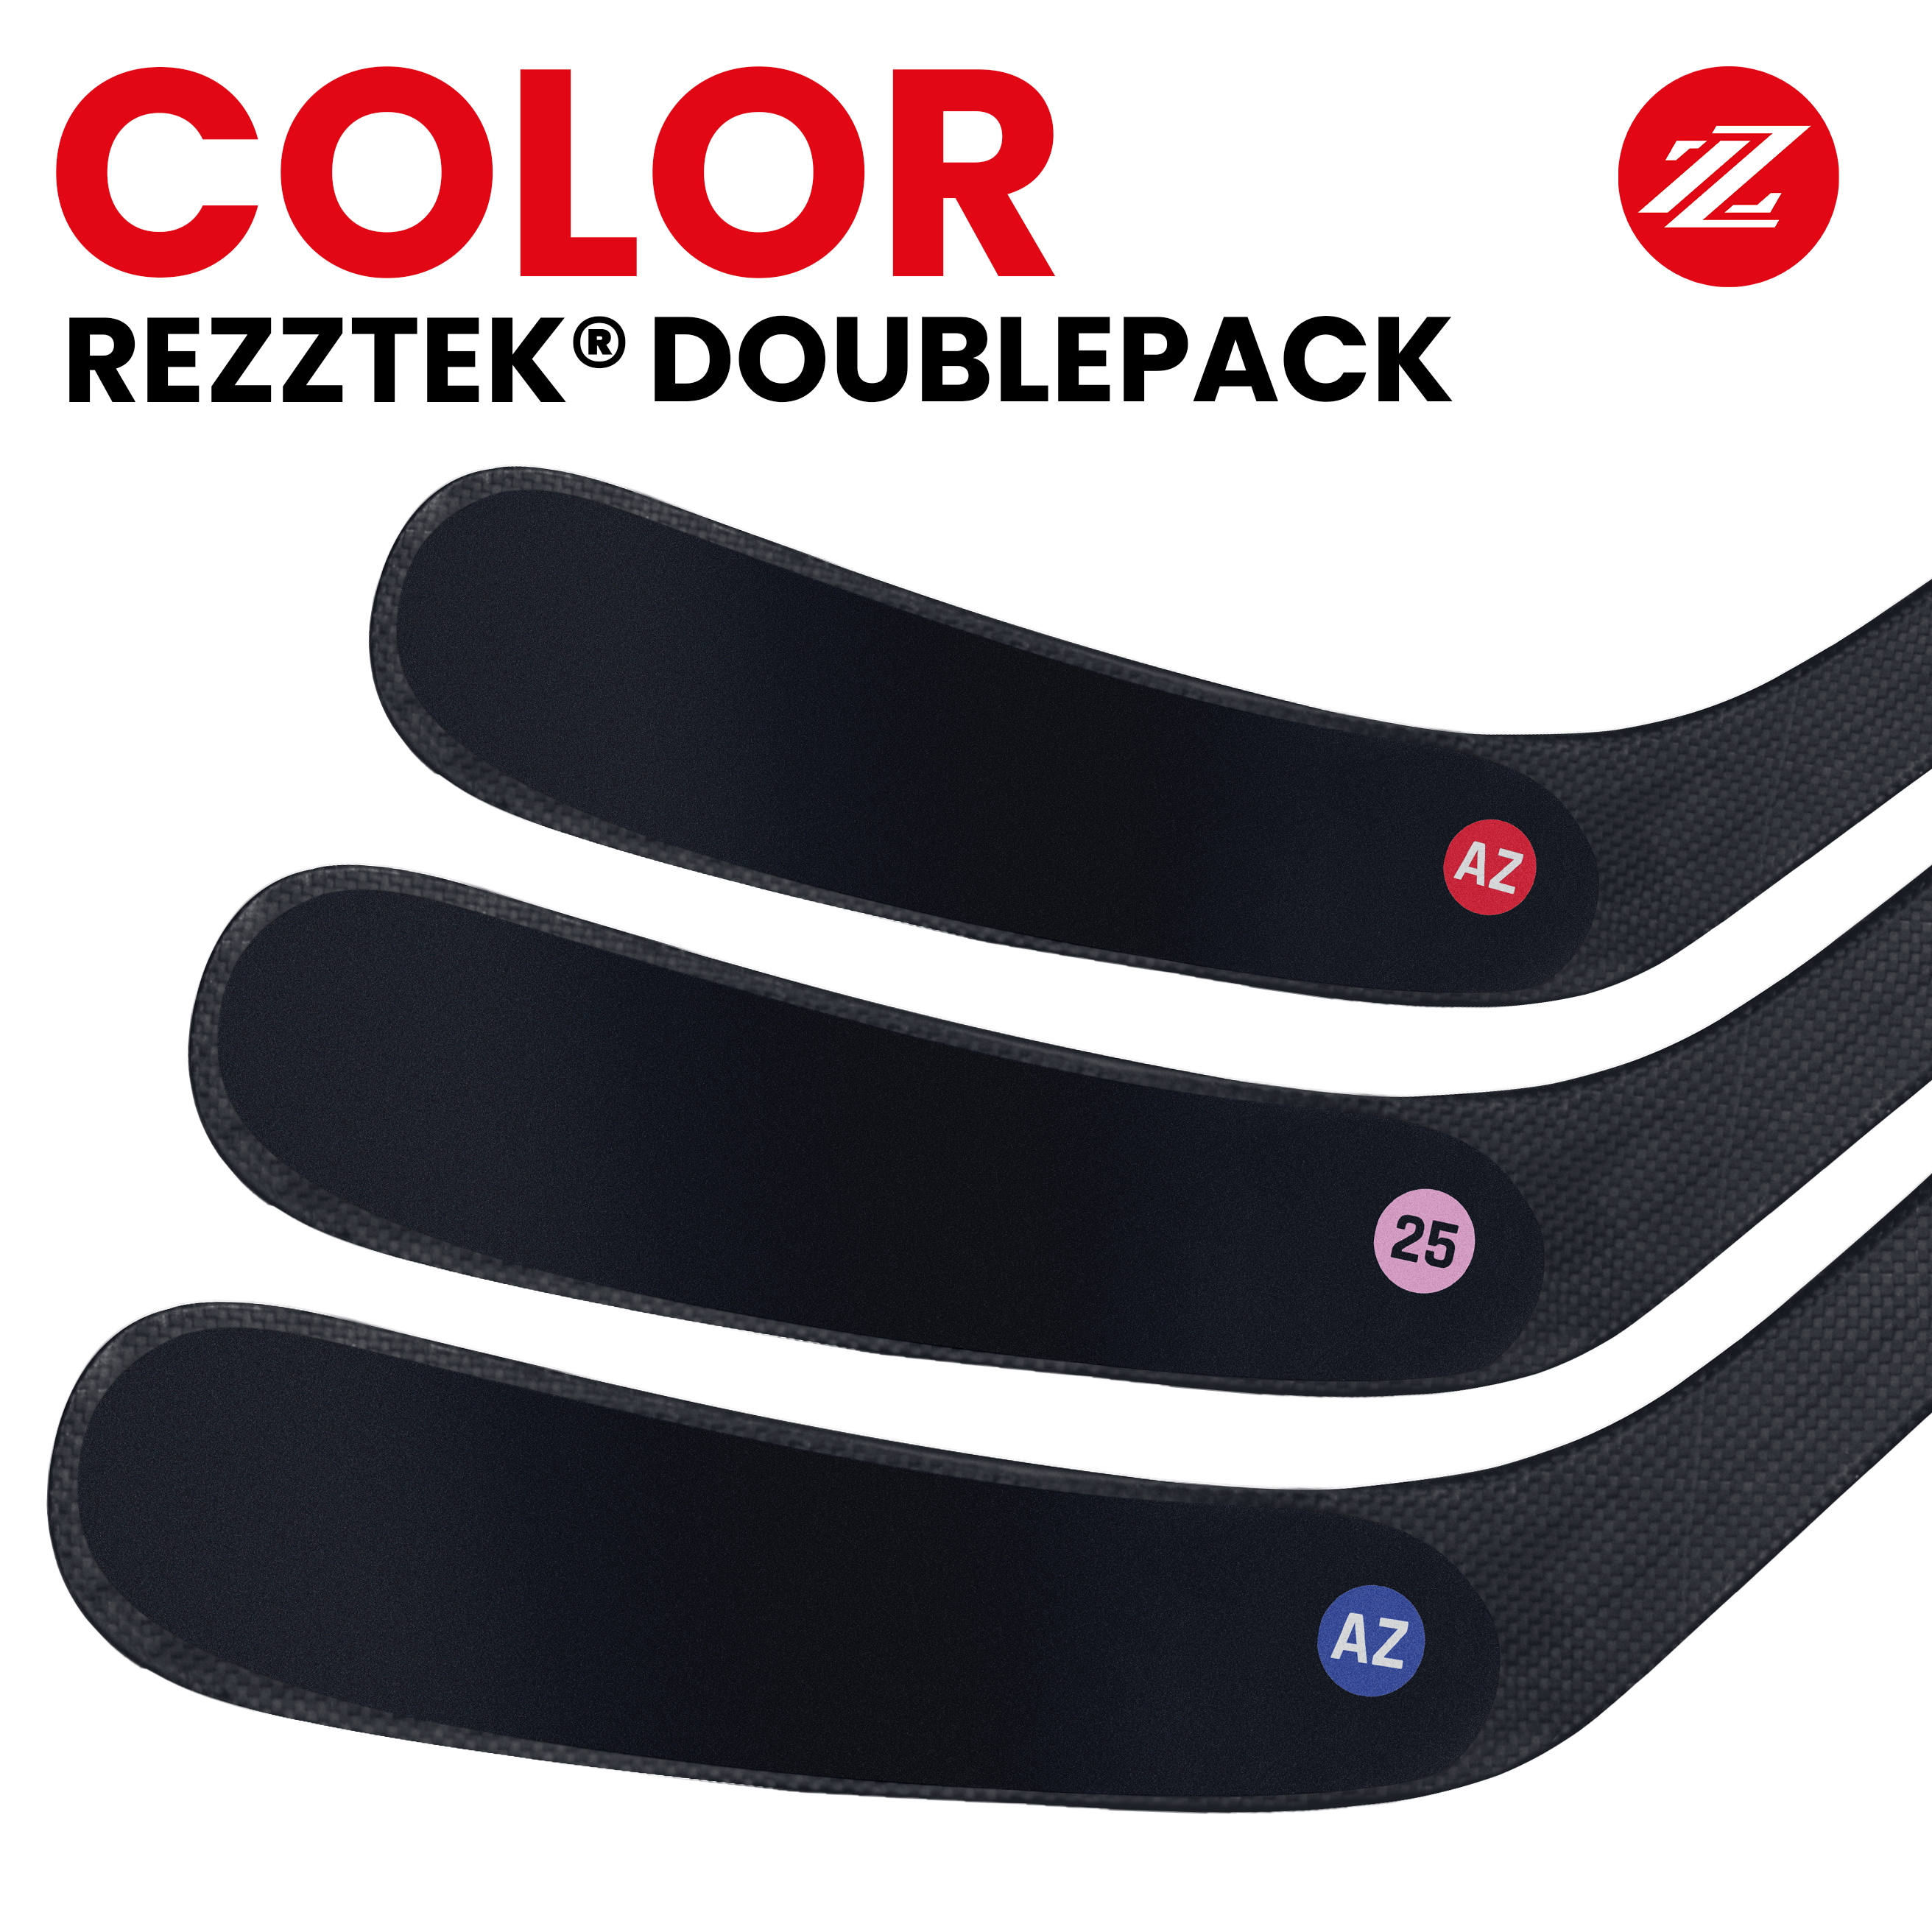 Color Rezztek® Doublepack Blade Grip